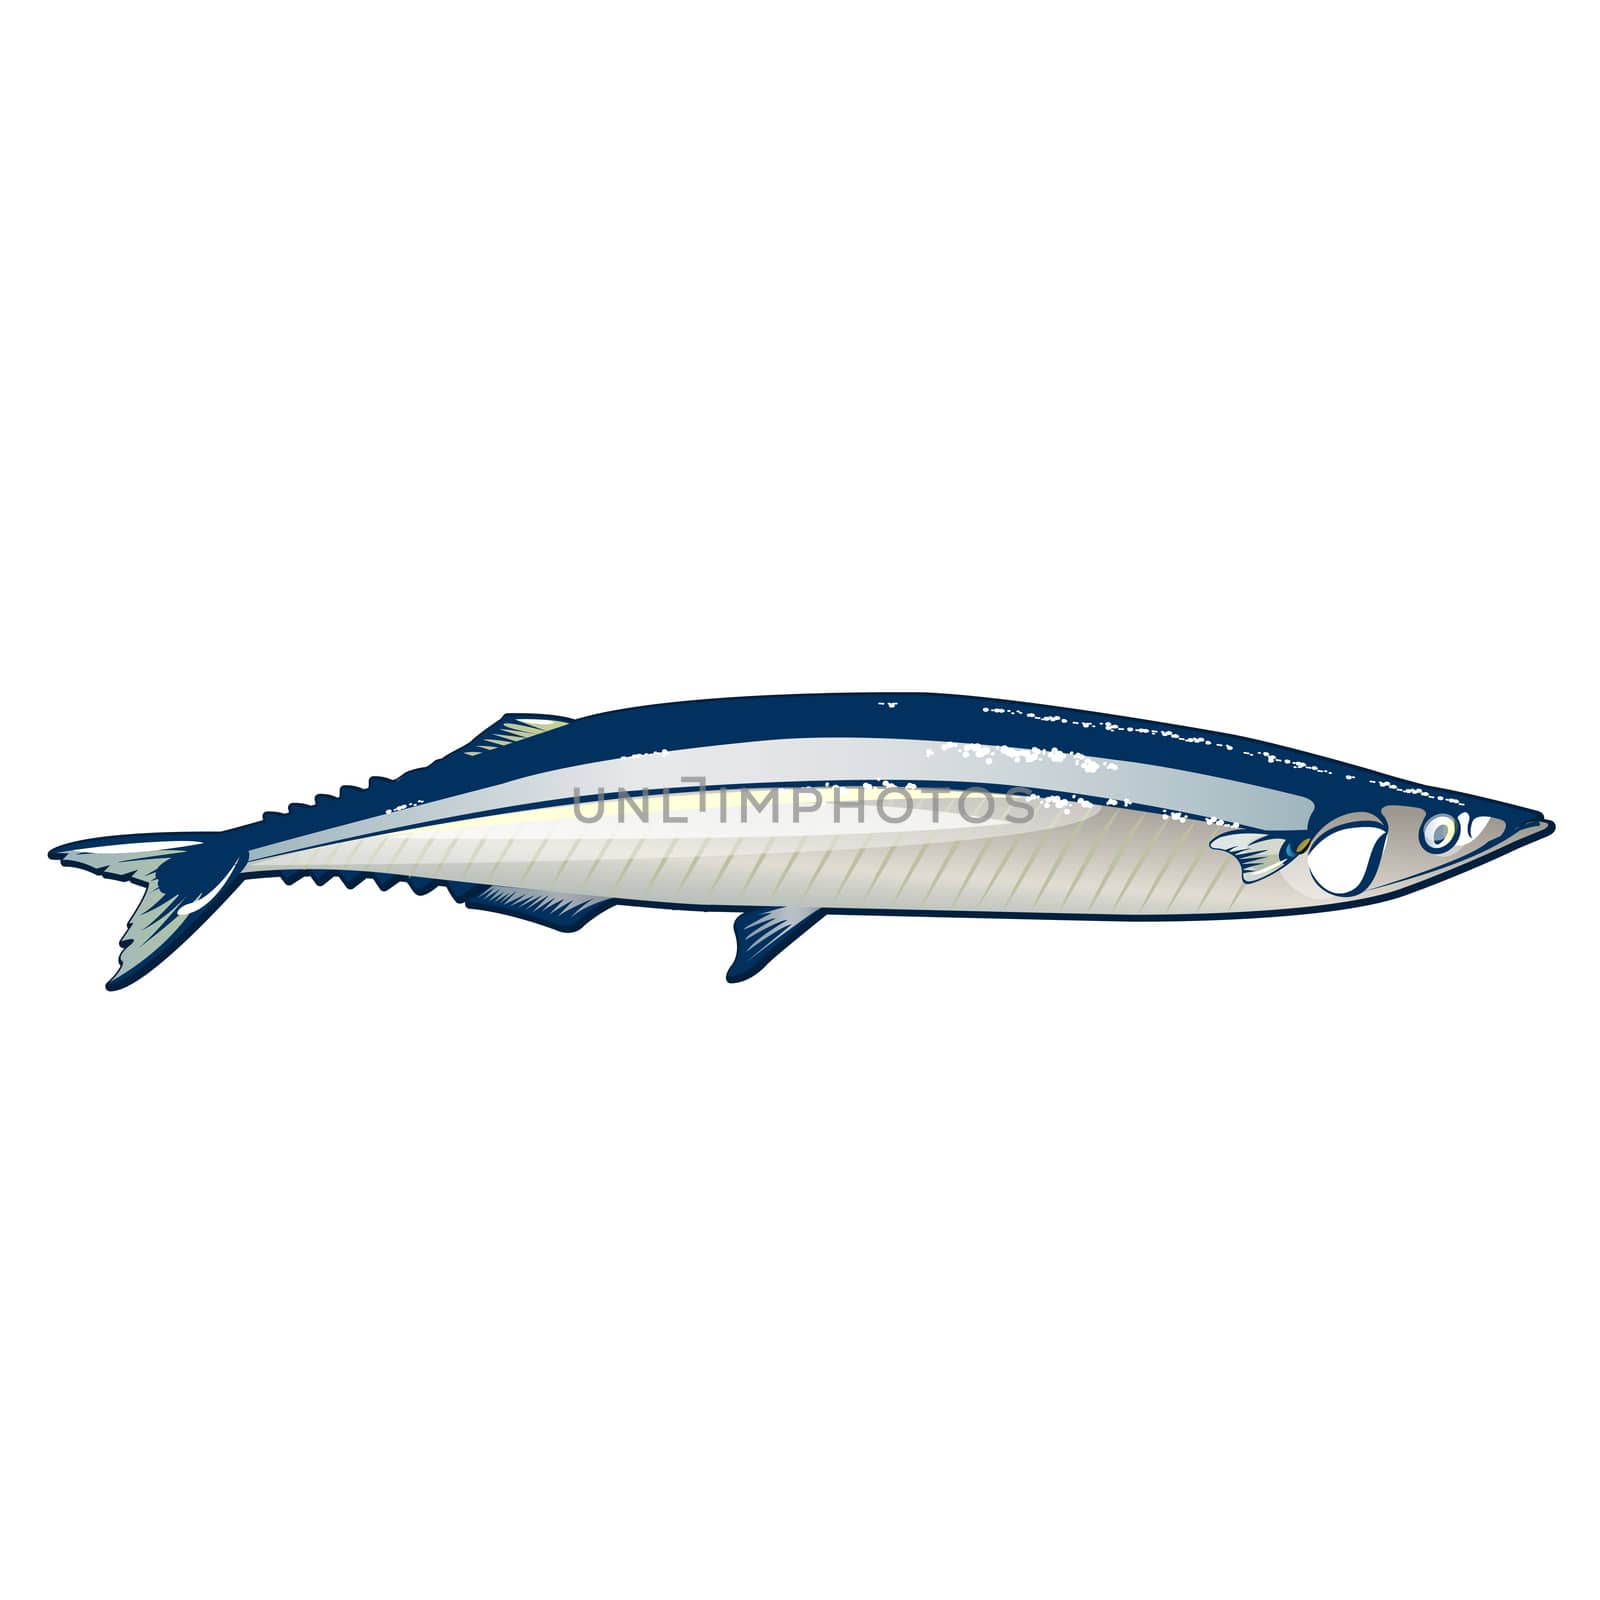 Seafood, isolated raster illustration on white background